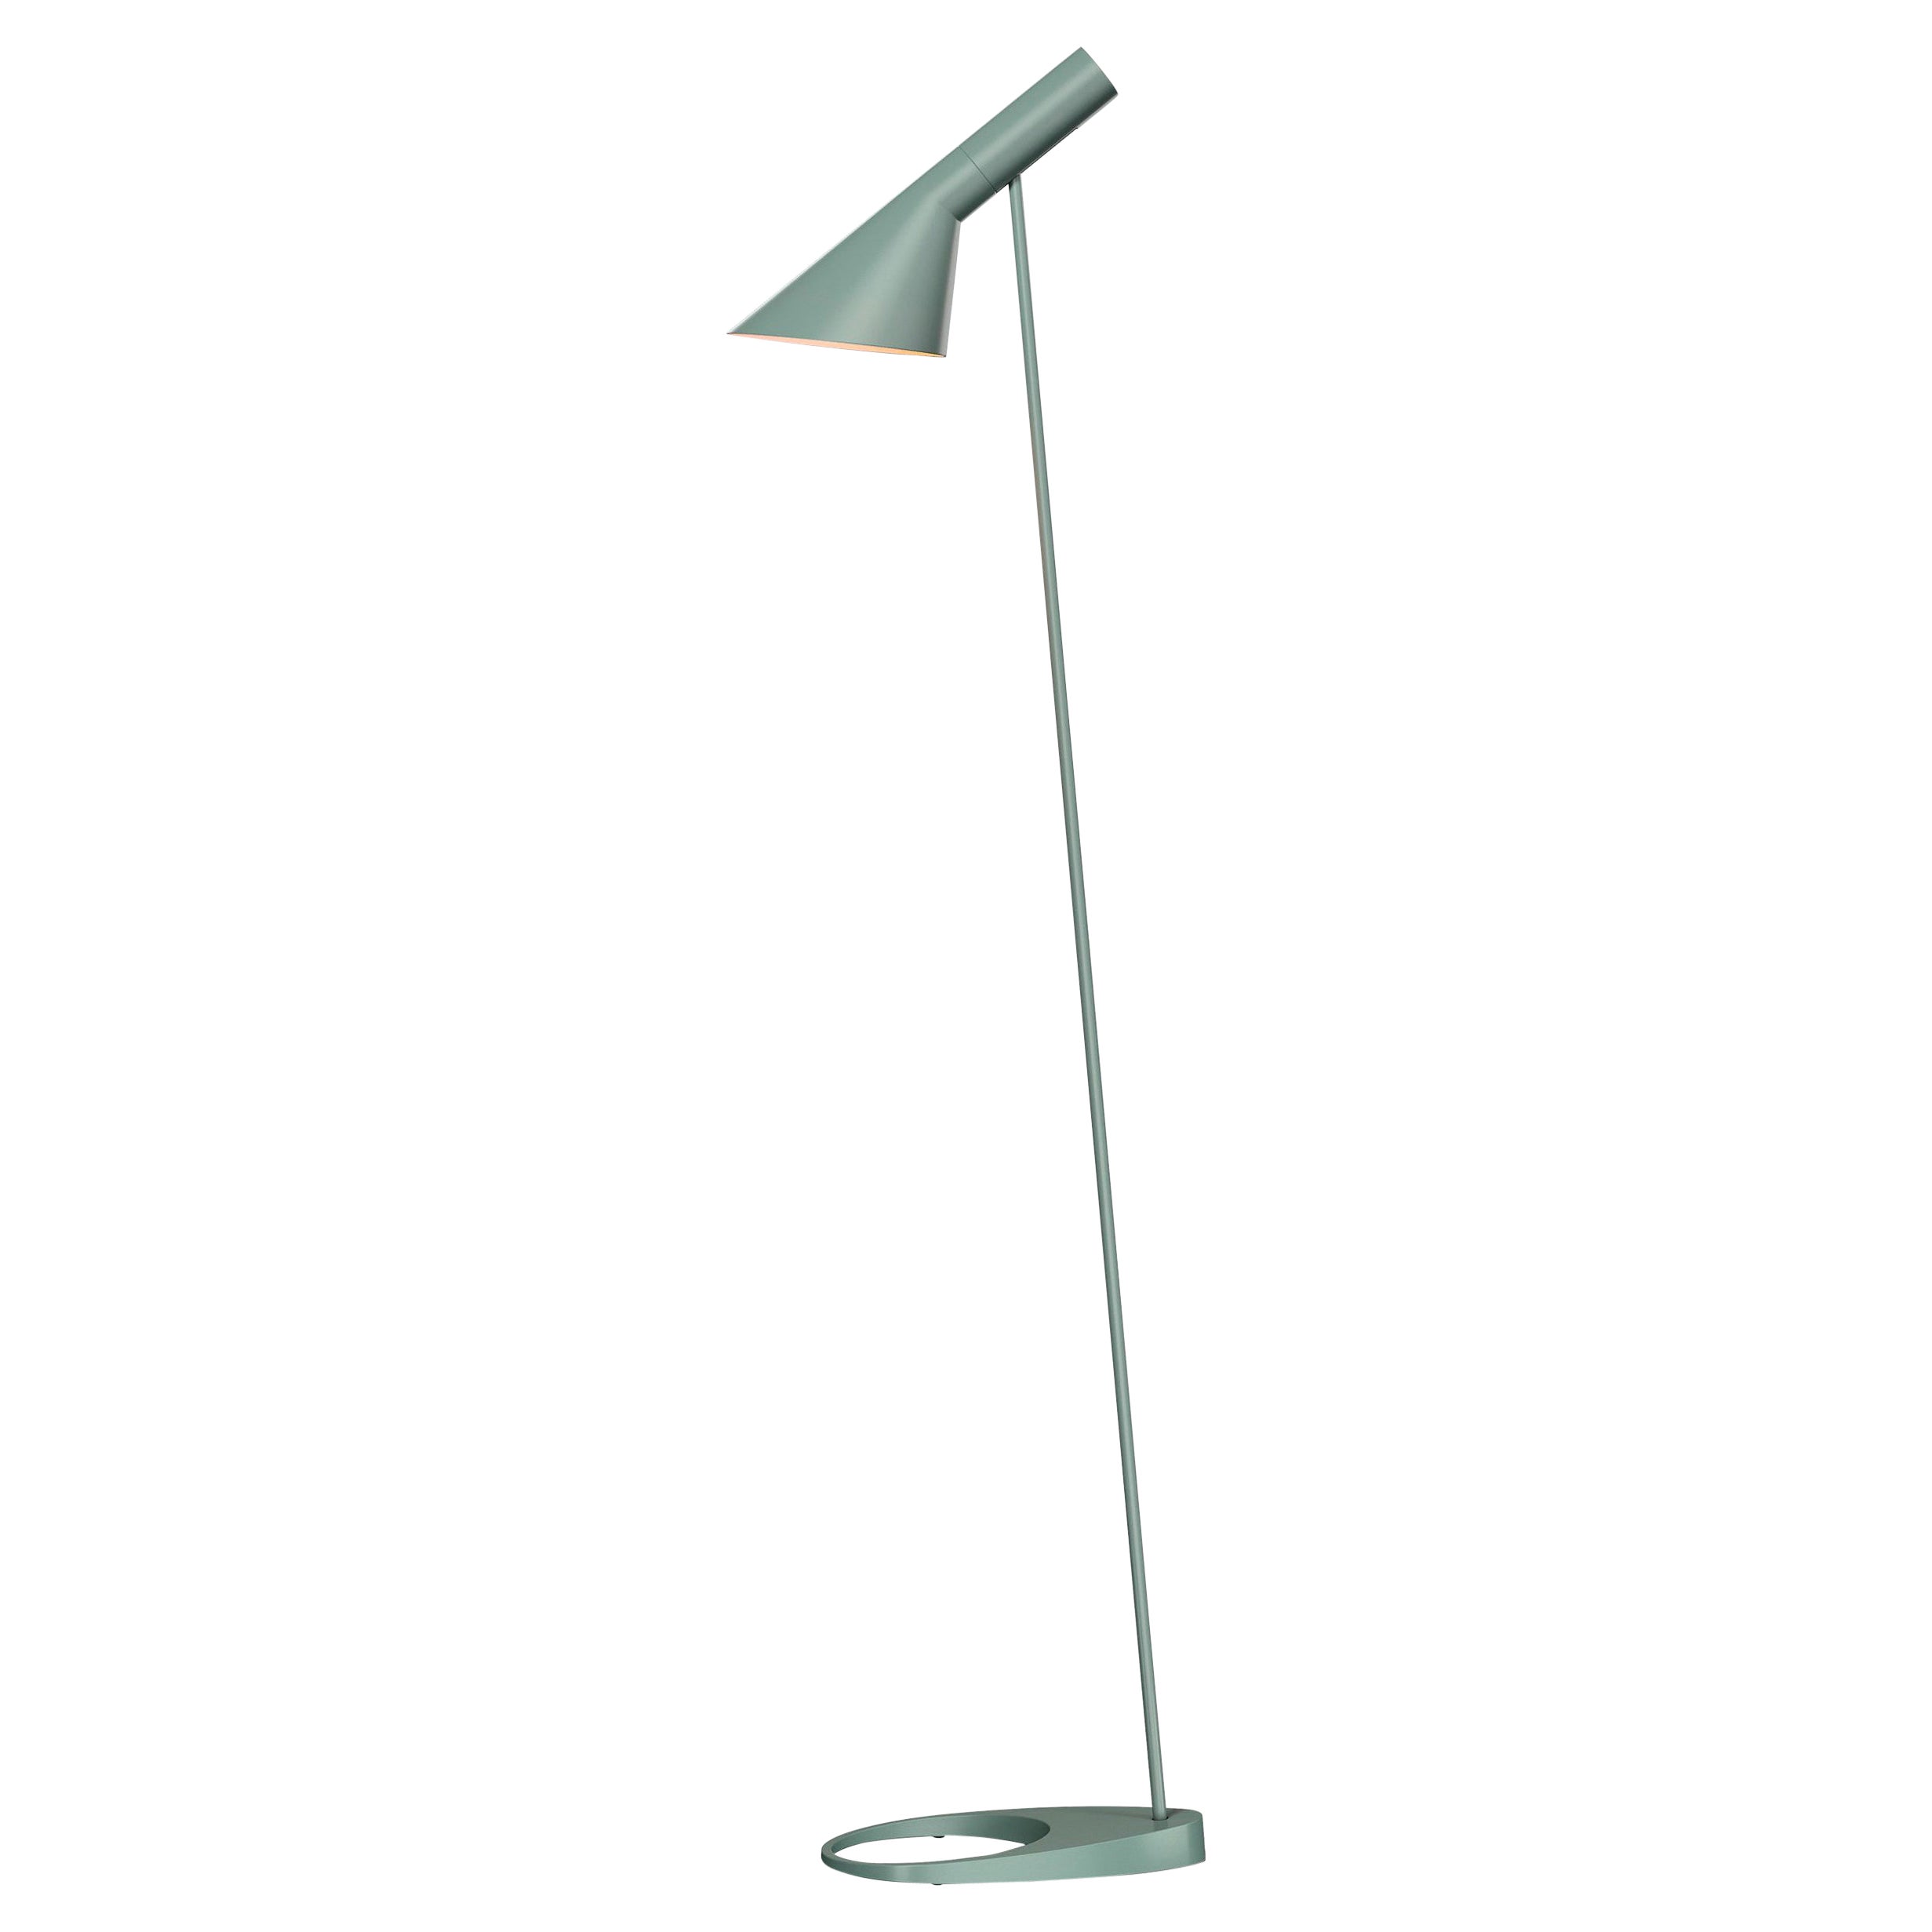 Arne Jacobsen AJ Floor Lamp in Pale Petroleum for Louis Poulsen